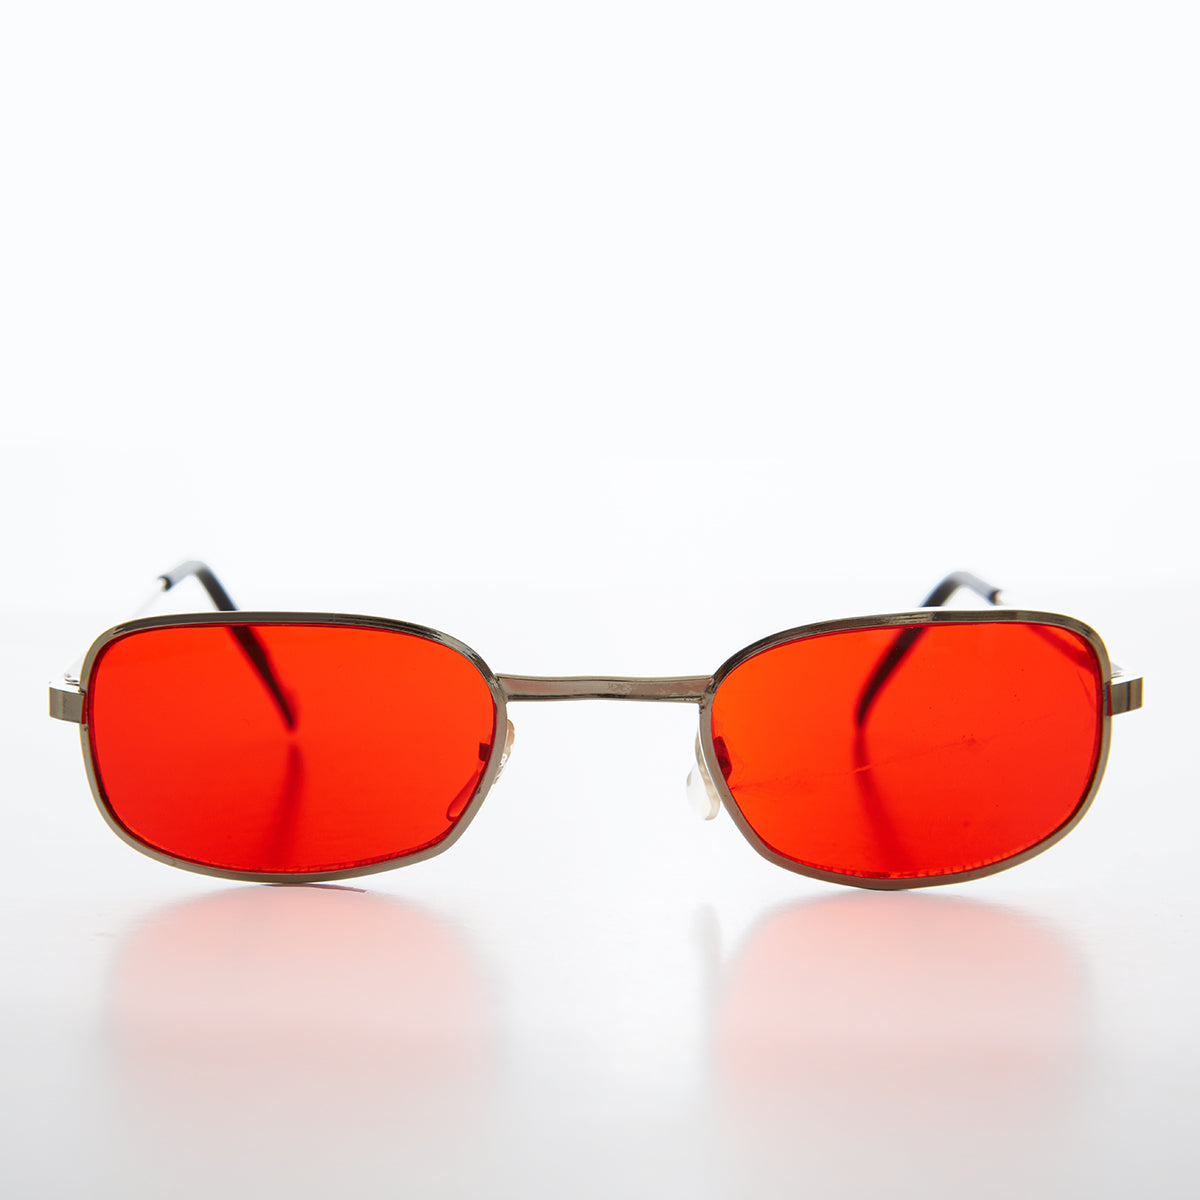 red lens sunglasses